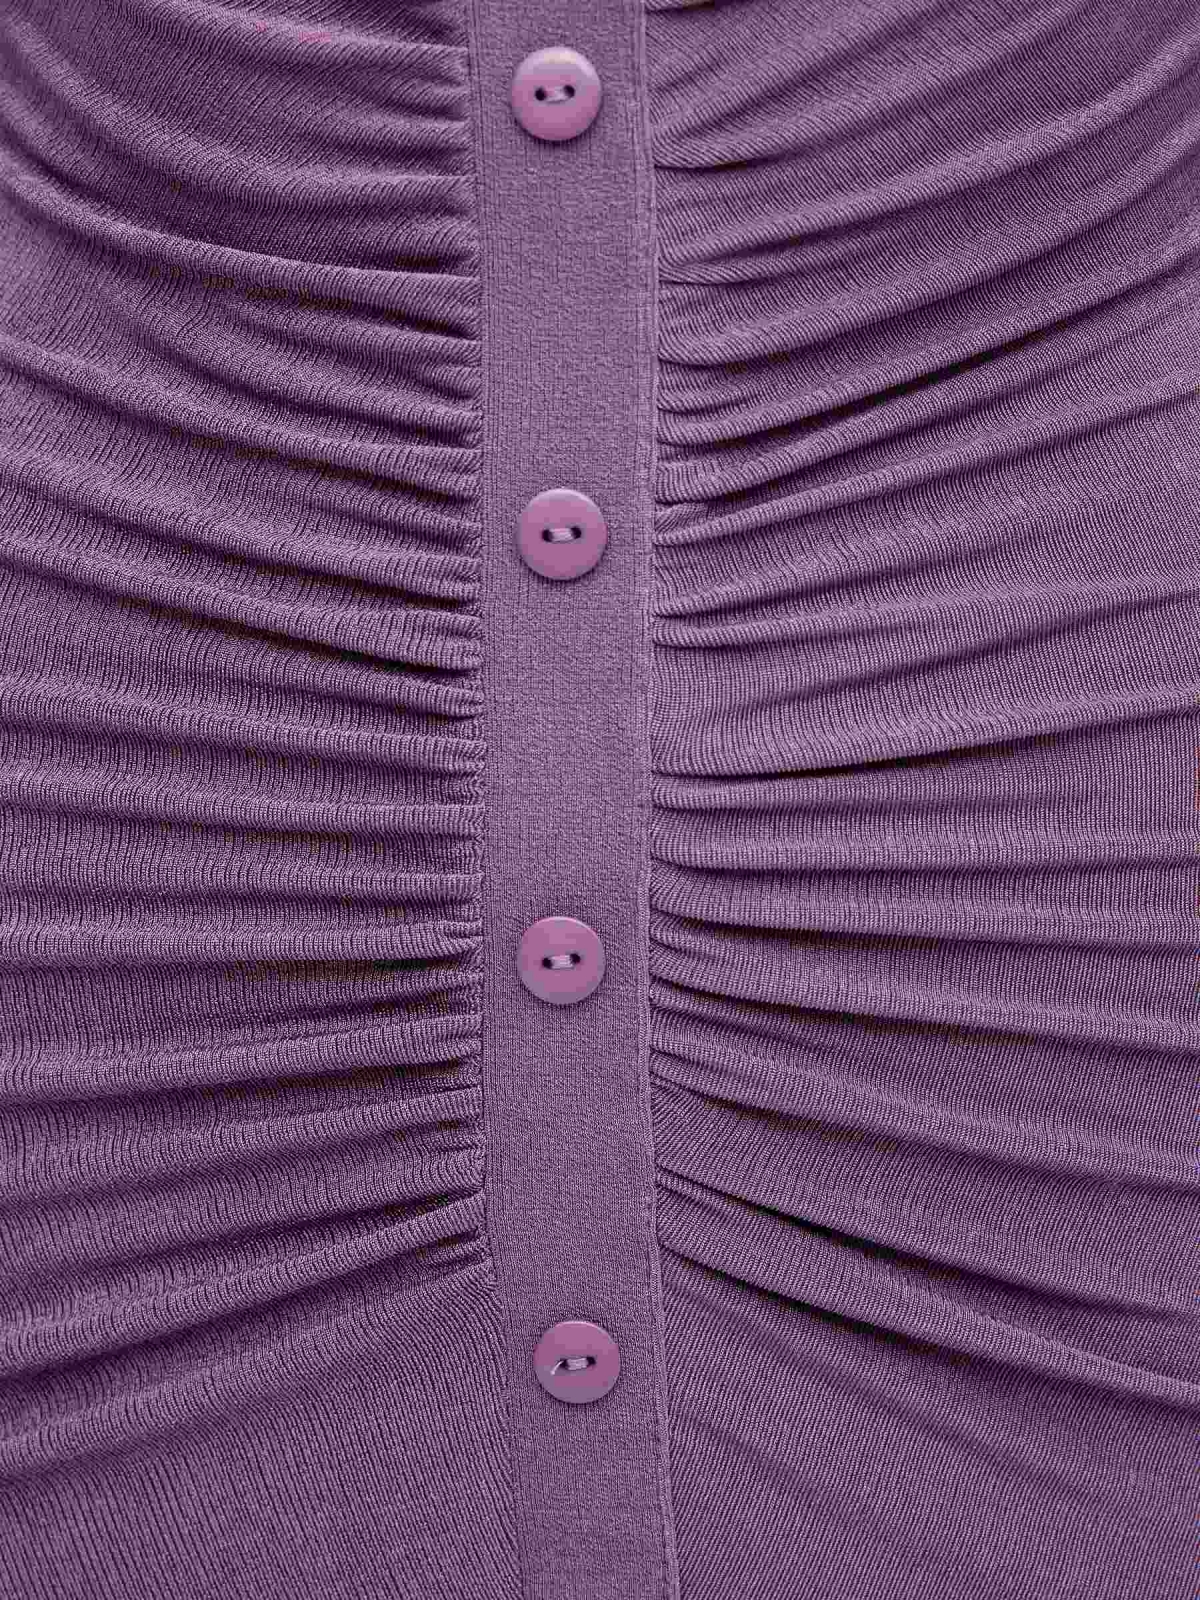 Mini dress with placket closure aubergine detail view